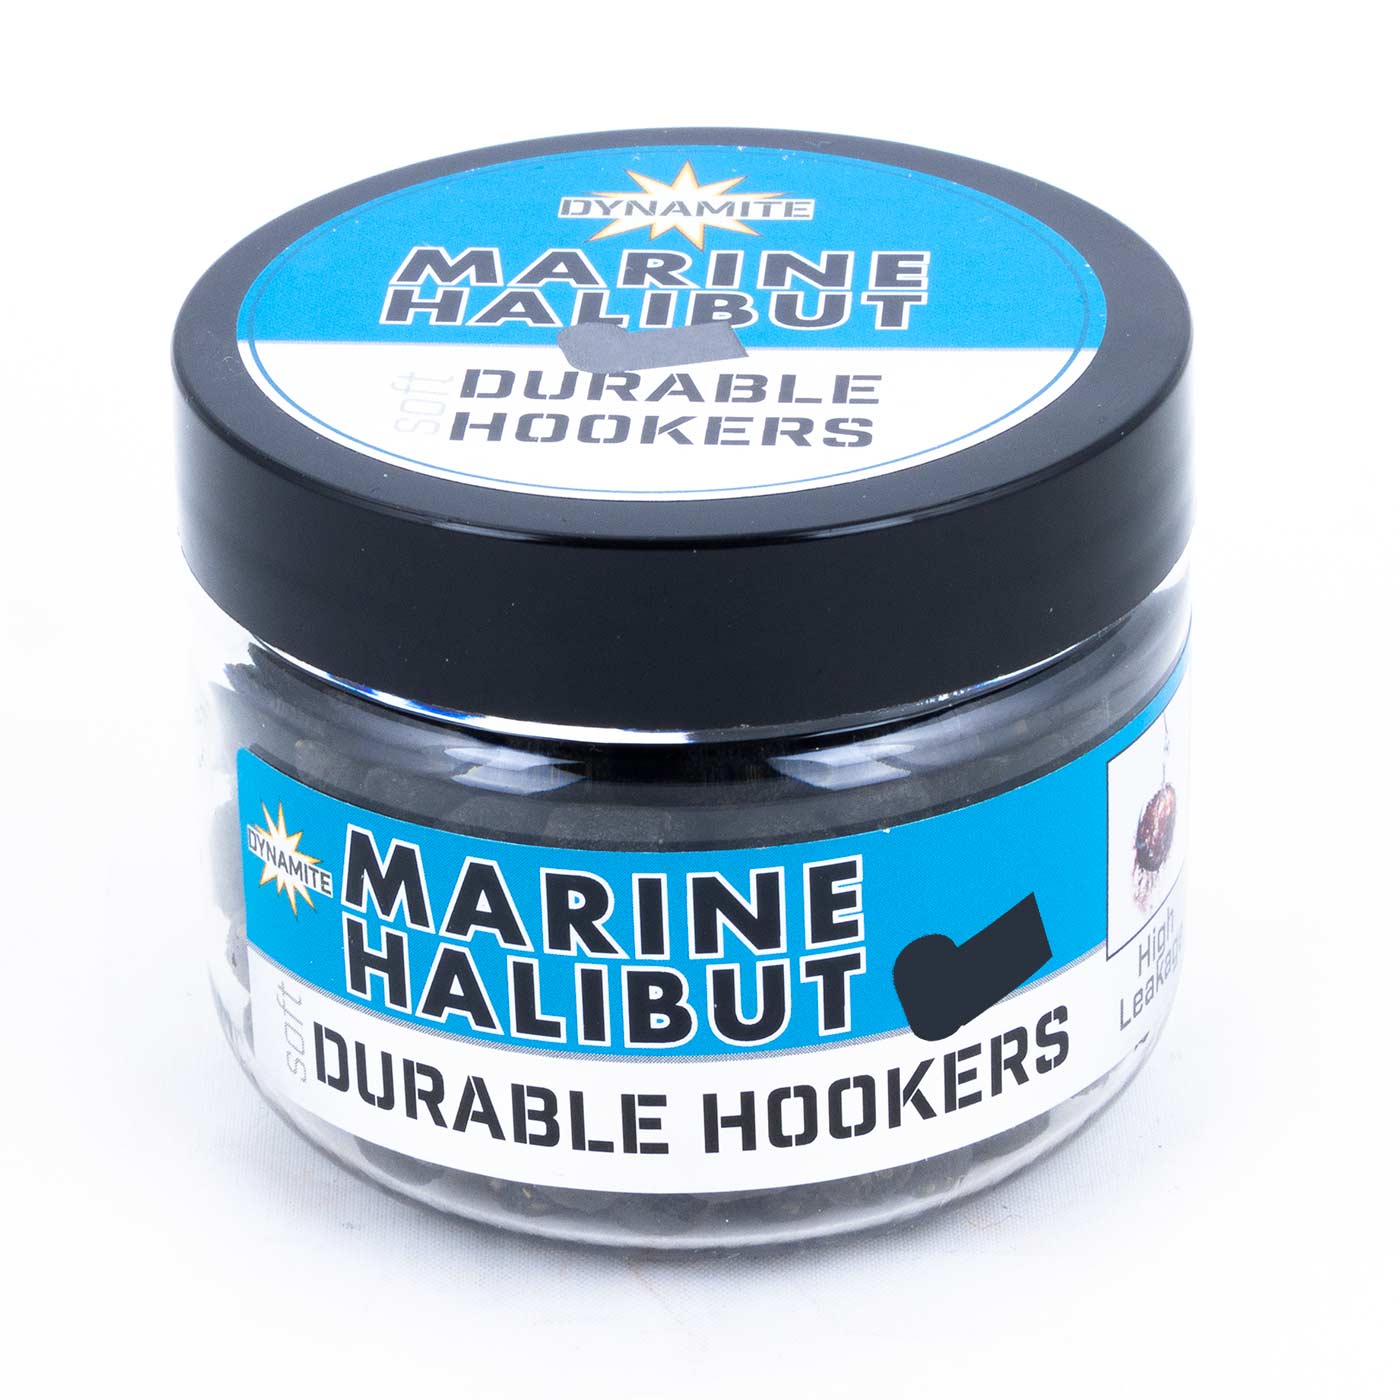 Durable Hookers - Marine Halibut